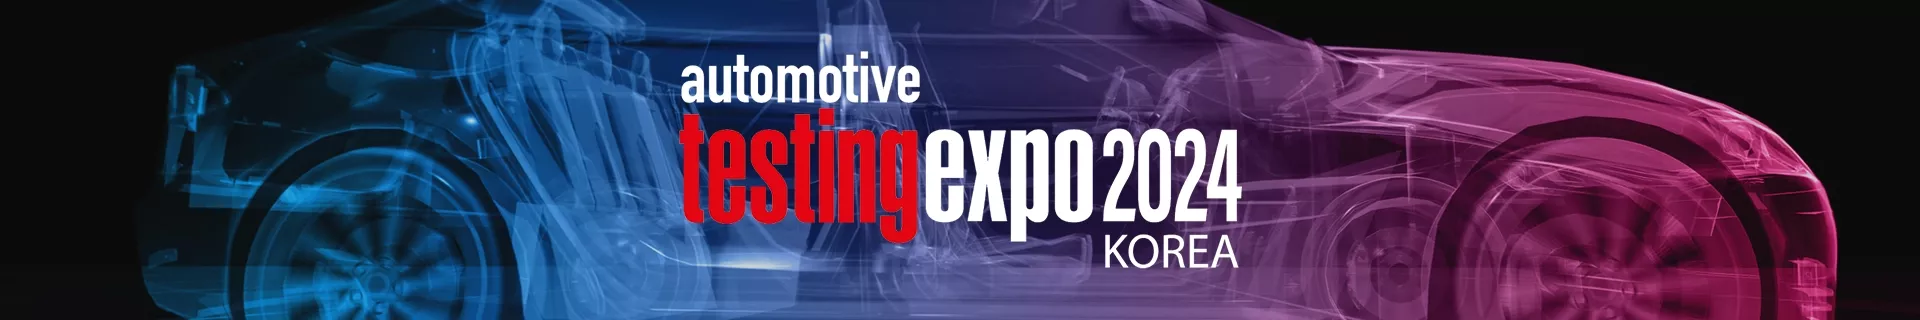 Header image Automotive Testing Expo Korea 2024